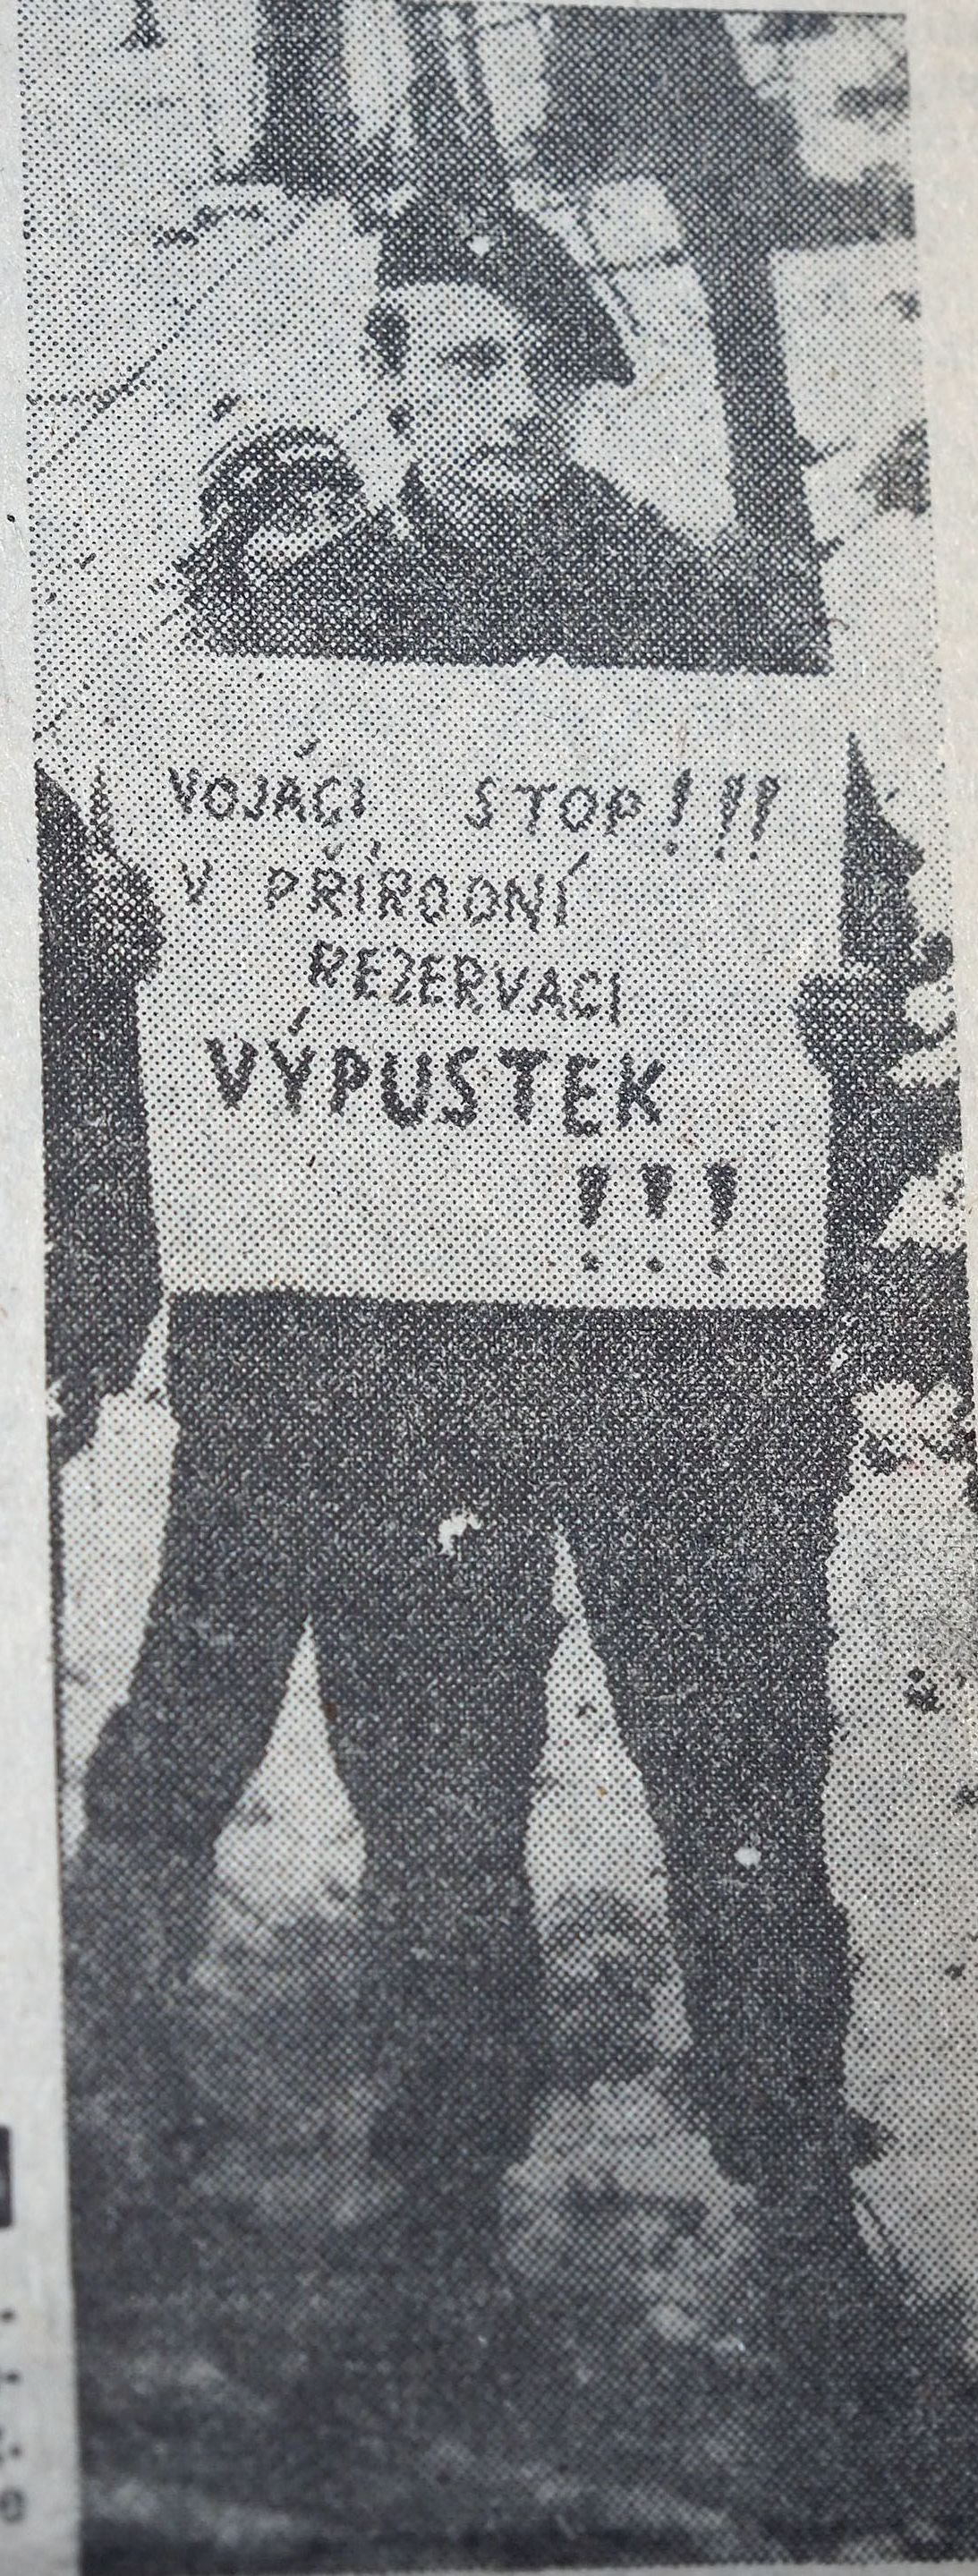 Marek Šenkyřík, demonstrant u Výpustku.